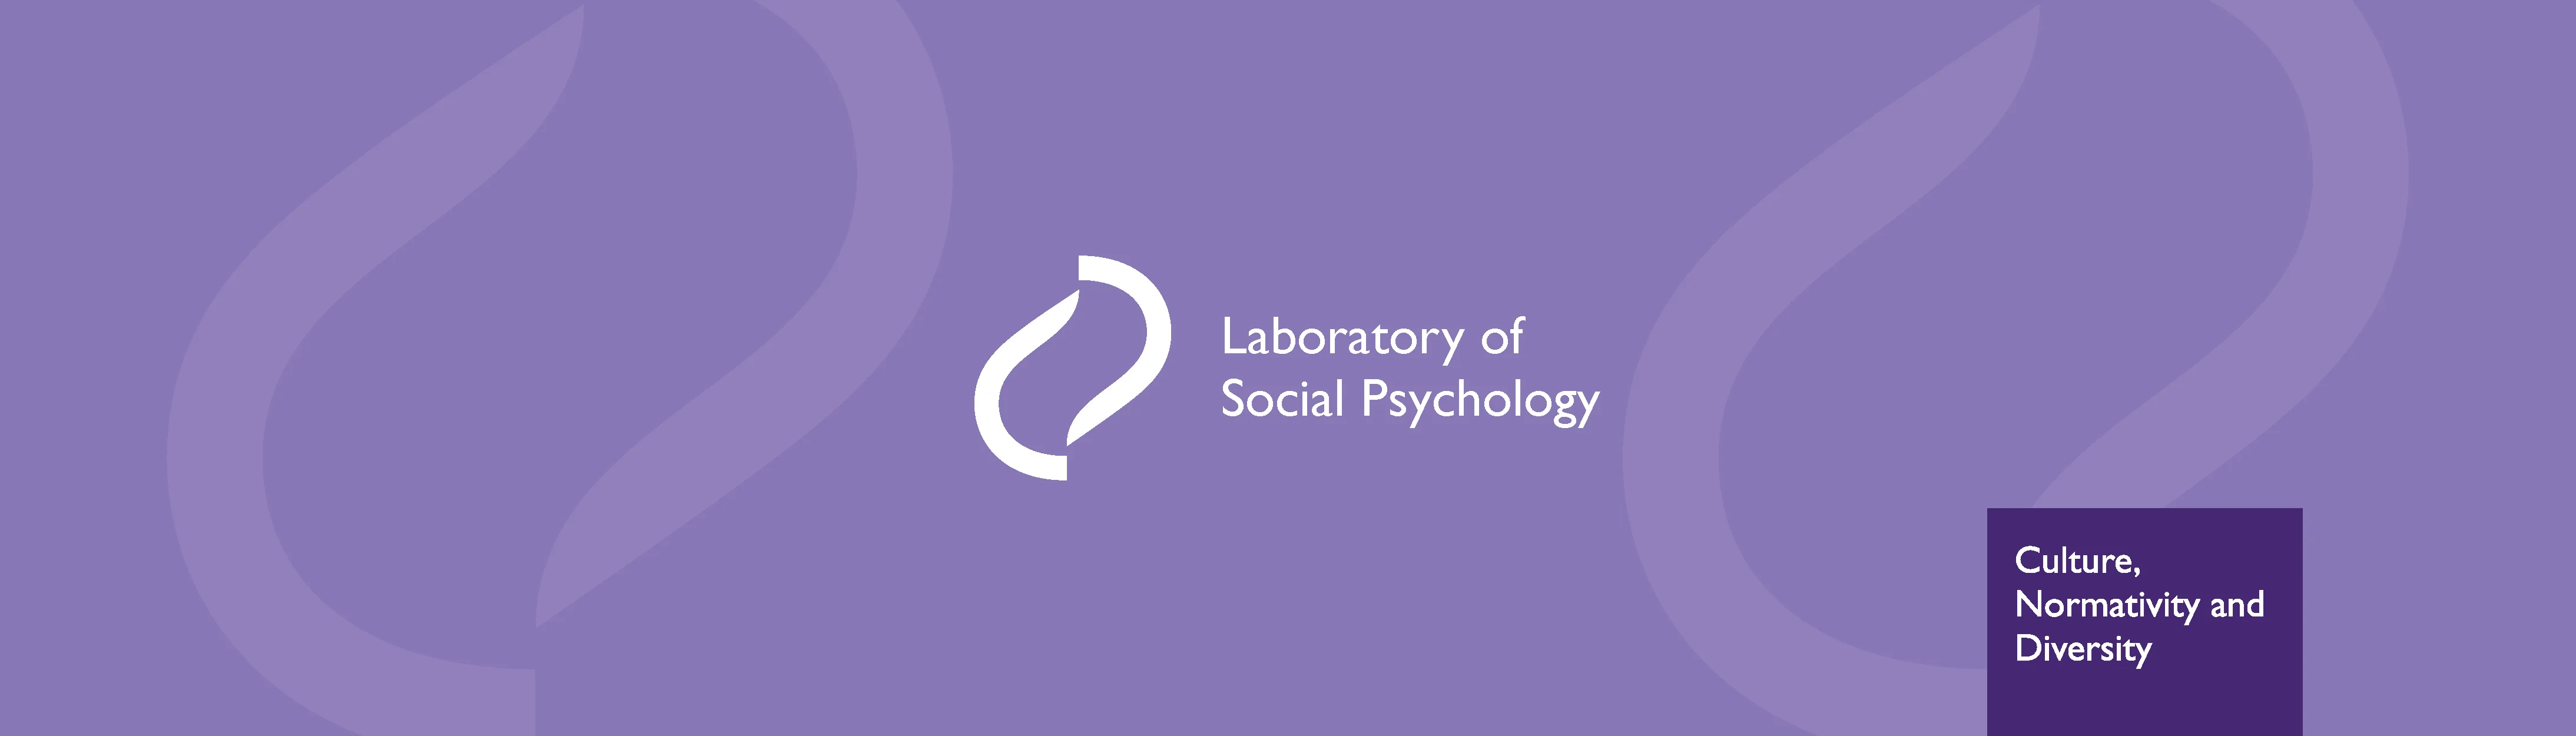 Laboratório de Psicologia Social